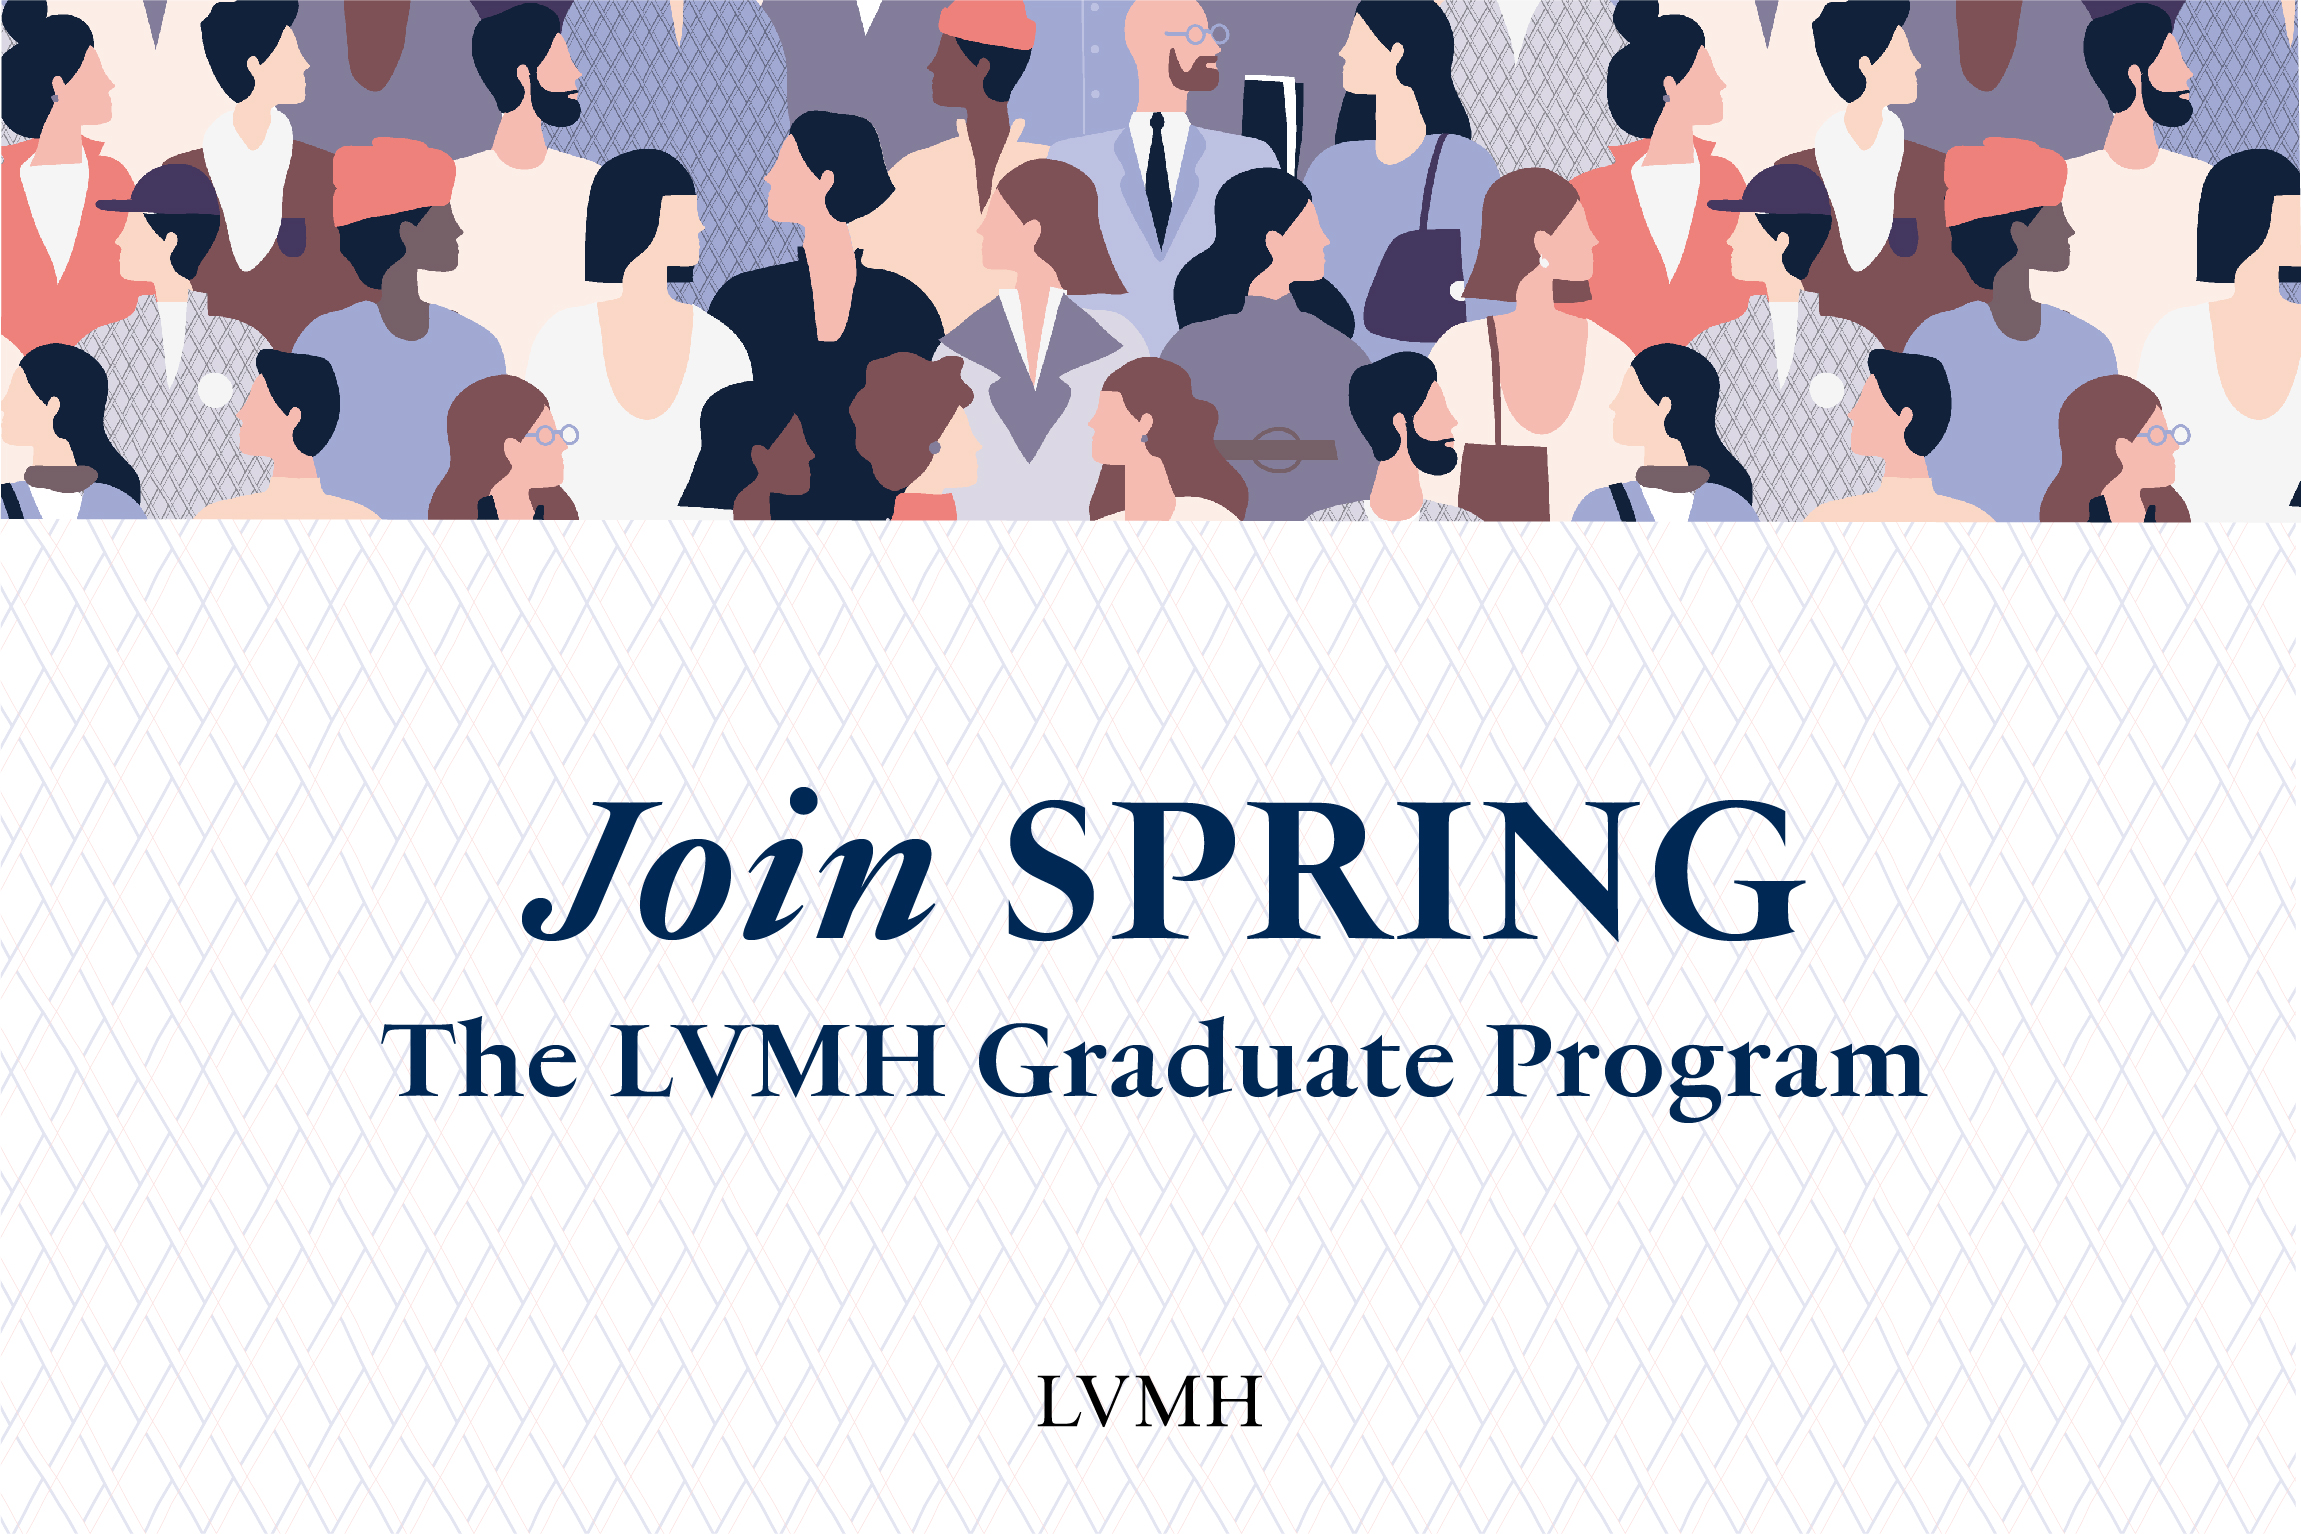 You and ME : le groupe LVMH cherche ses futurs talents !